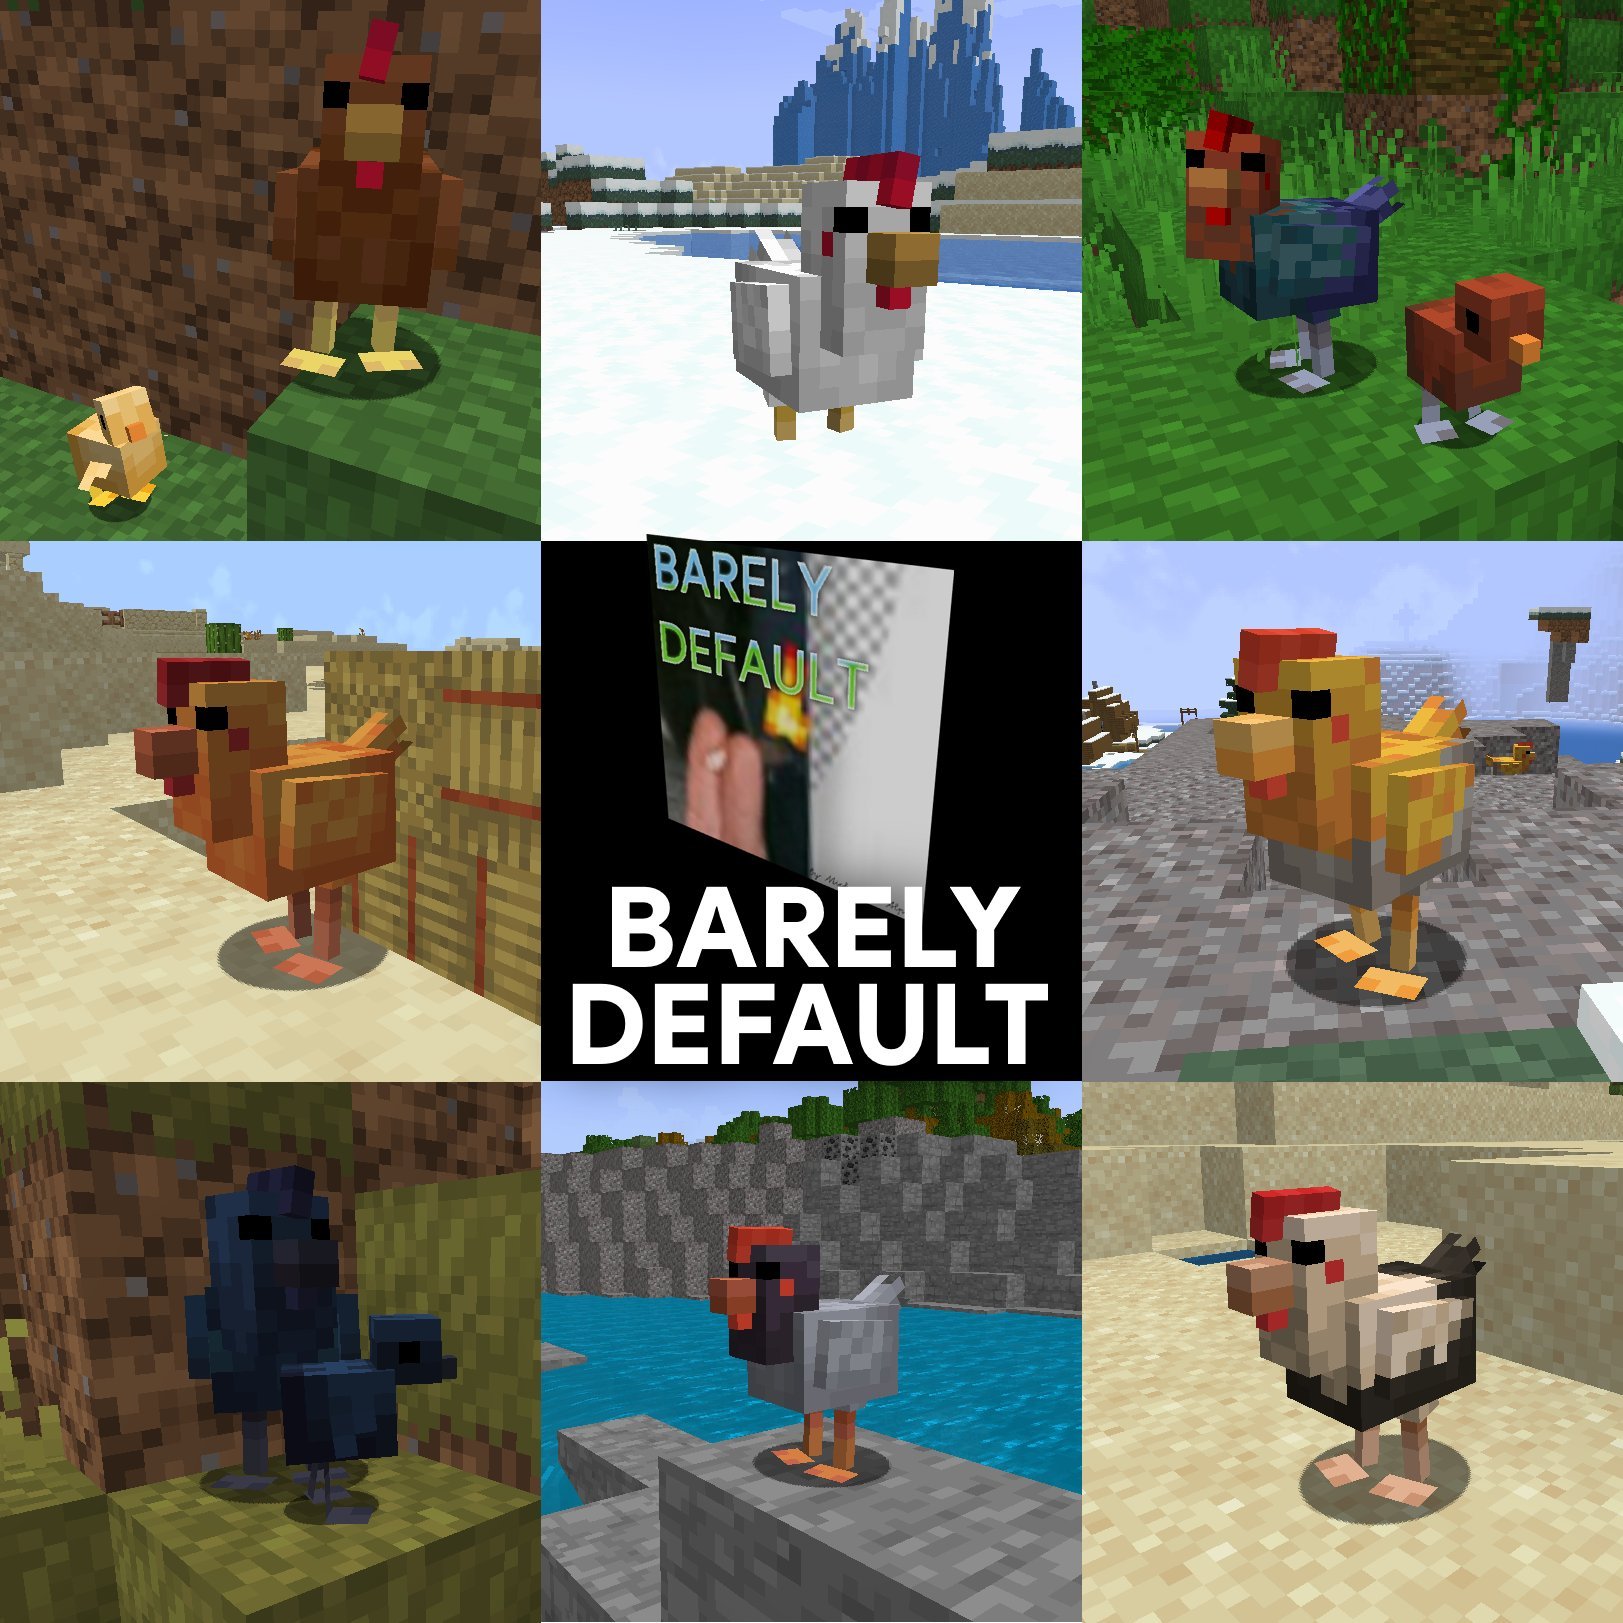 Chicken variants based on Minecraft Earth